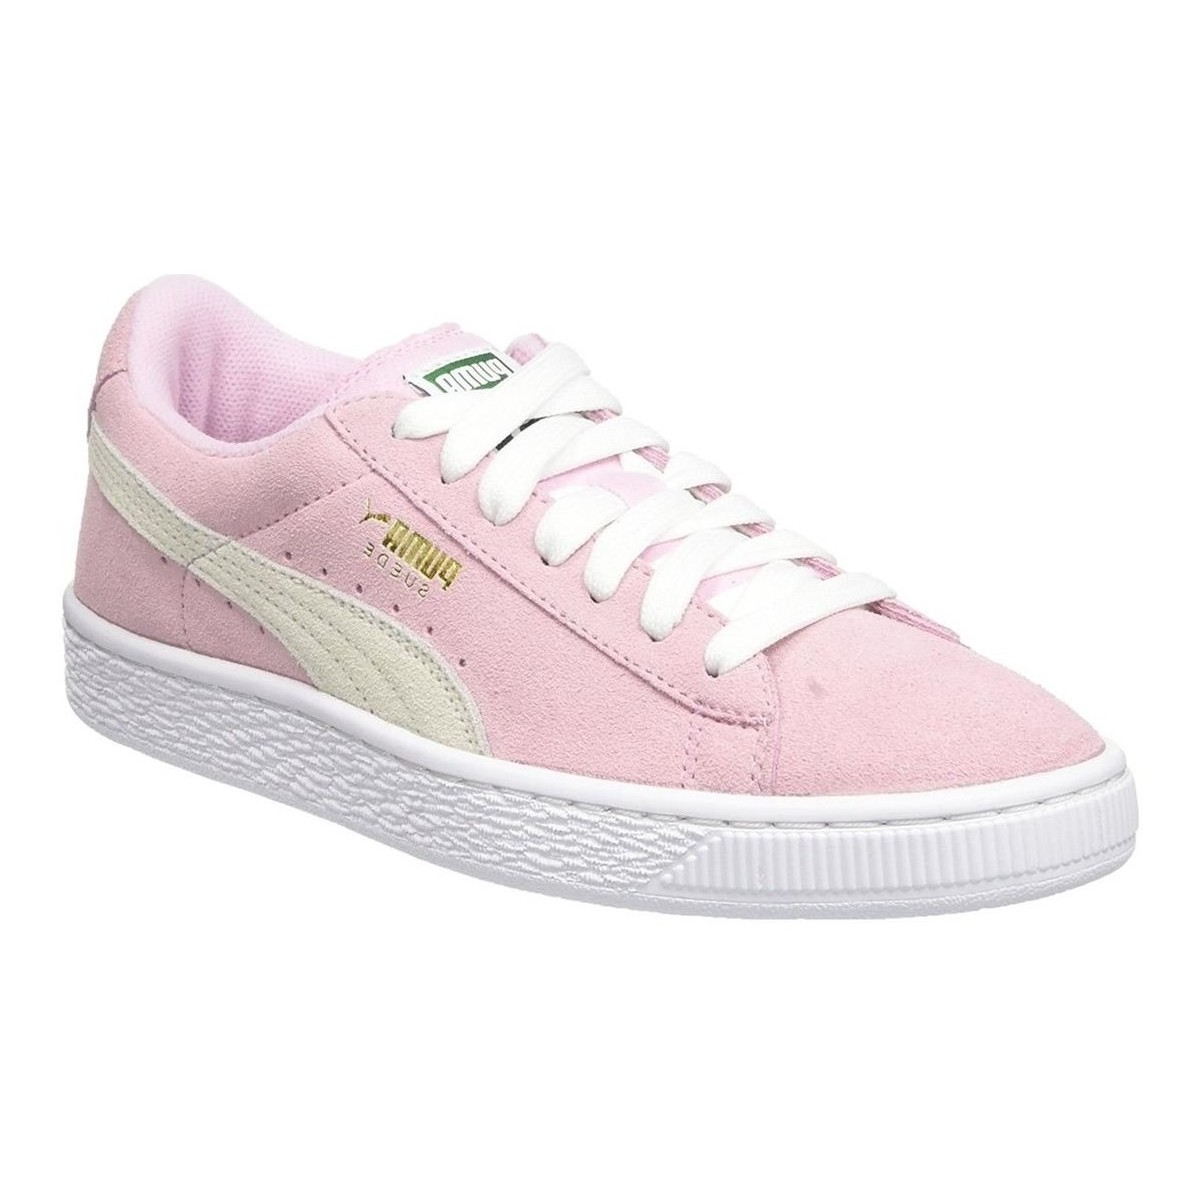 Pantofi Femei Sneakers Puma 352634 roz